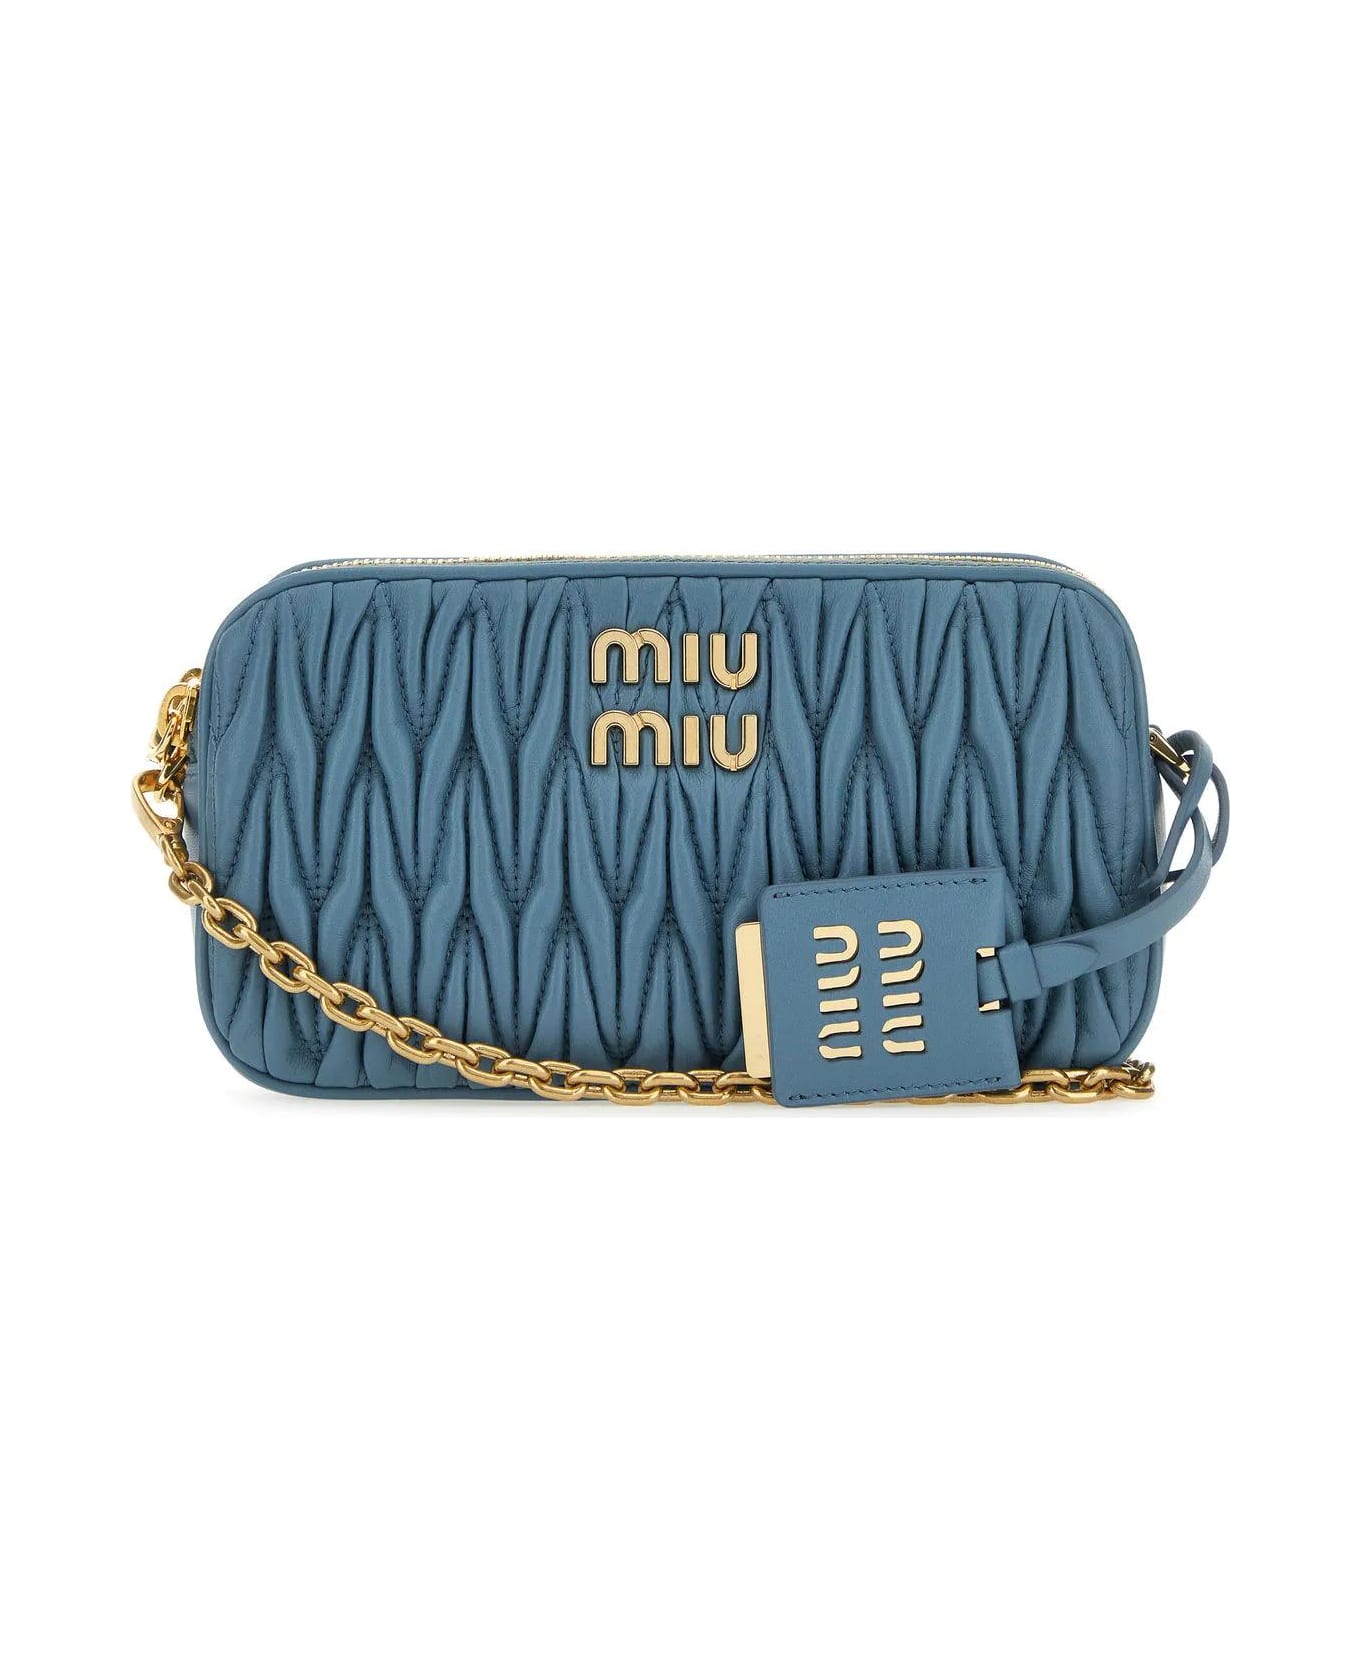 Miu Miu Teal Green Nappa Leather Mini Crossbody Bag - Blue